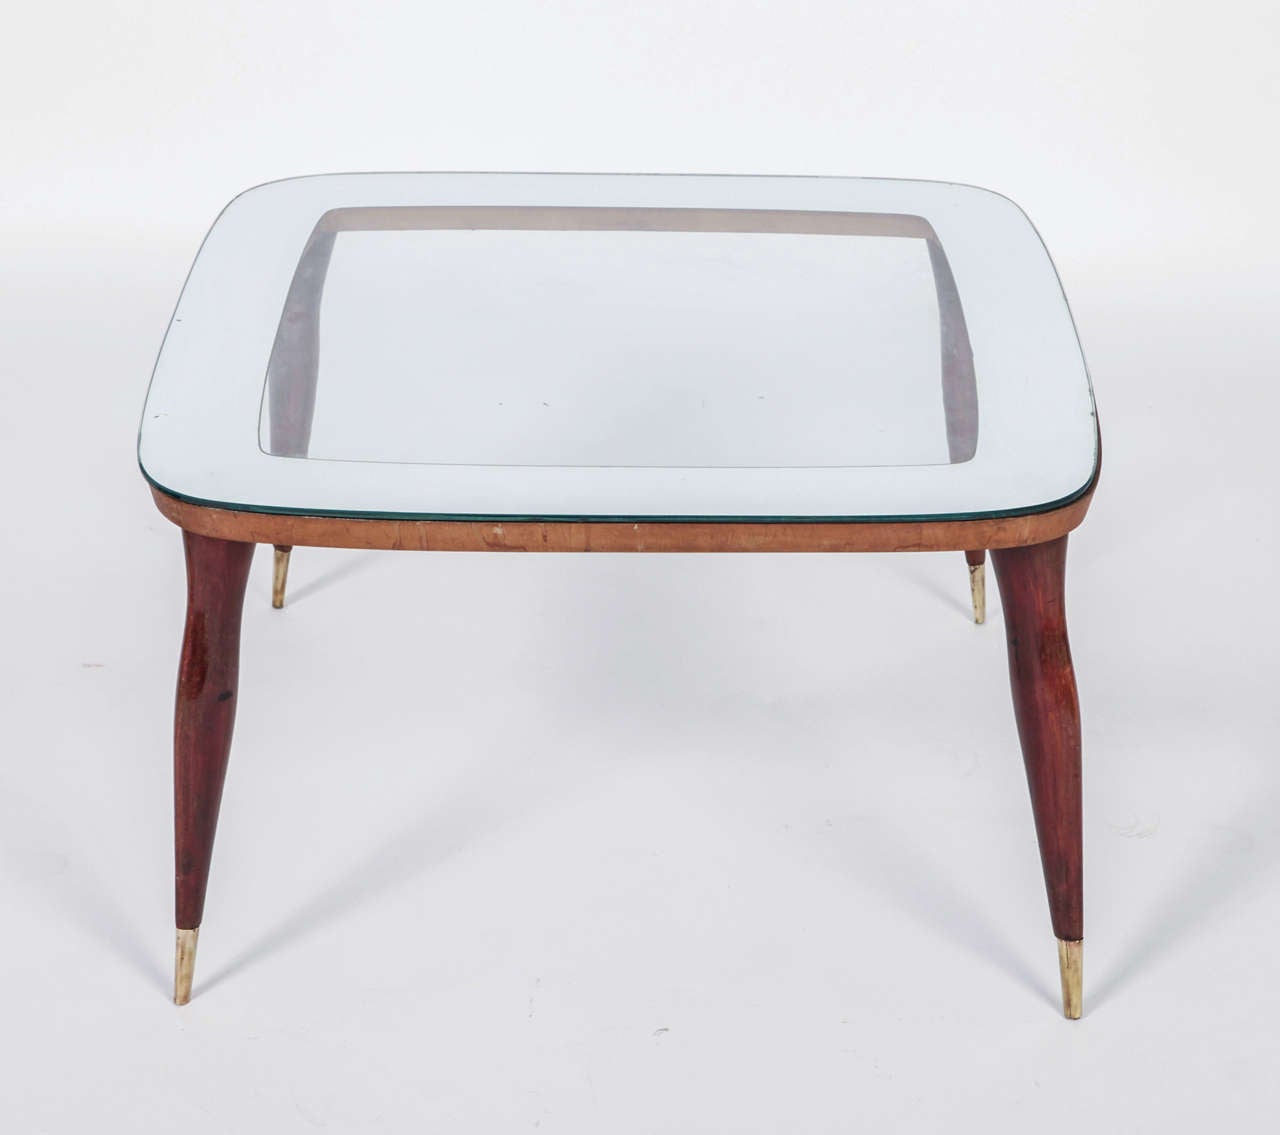 fine coffe table  attr. Guglielmo Ulrich circa 1940
bronze feet, mirrored top,very sinuos female and elegant  legs